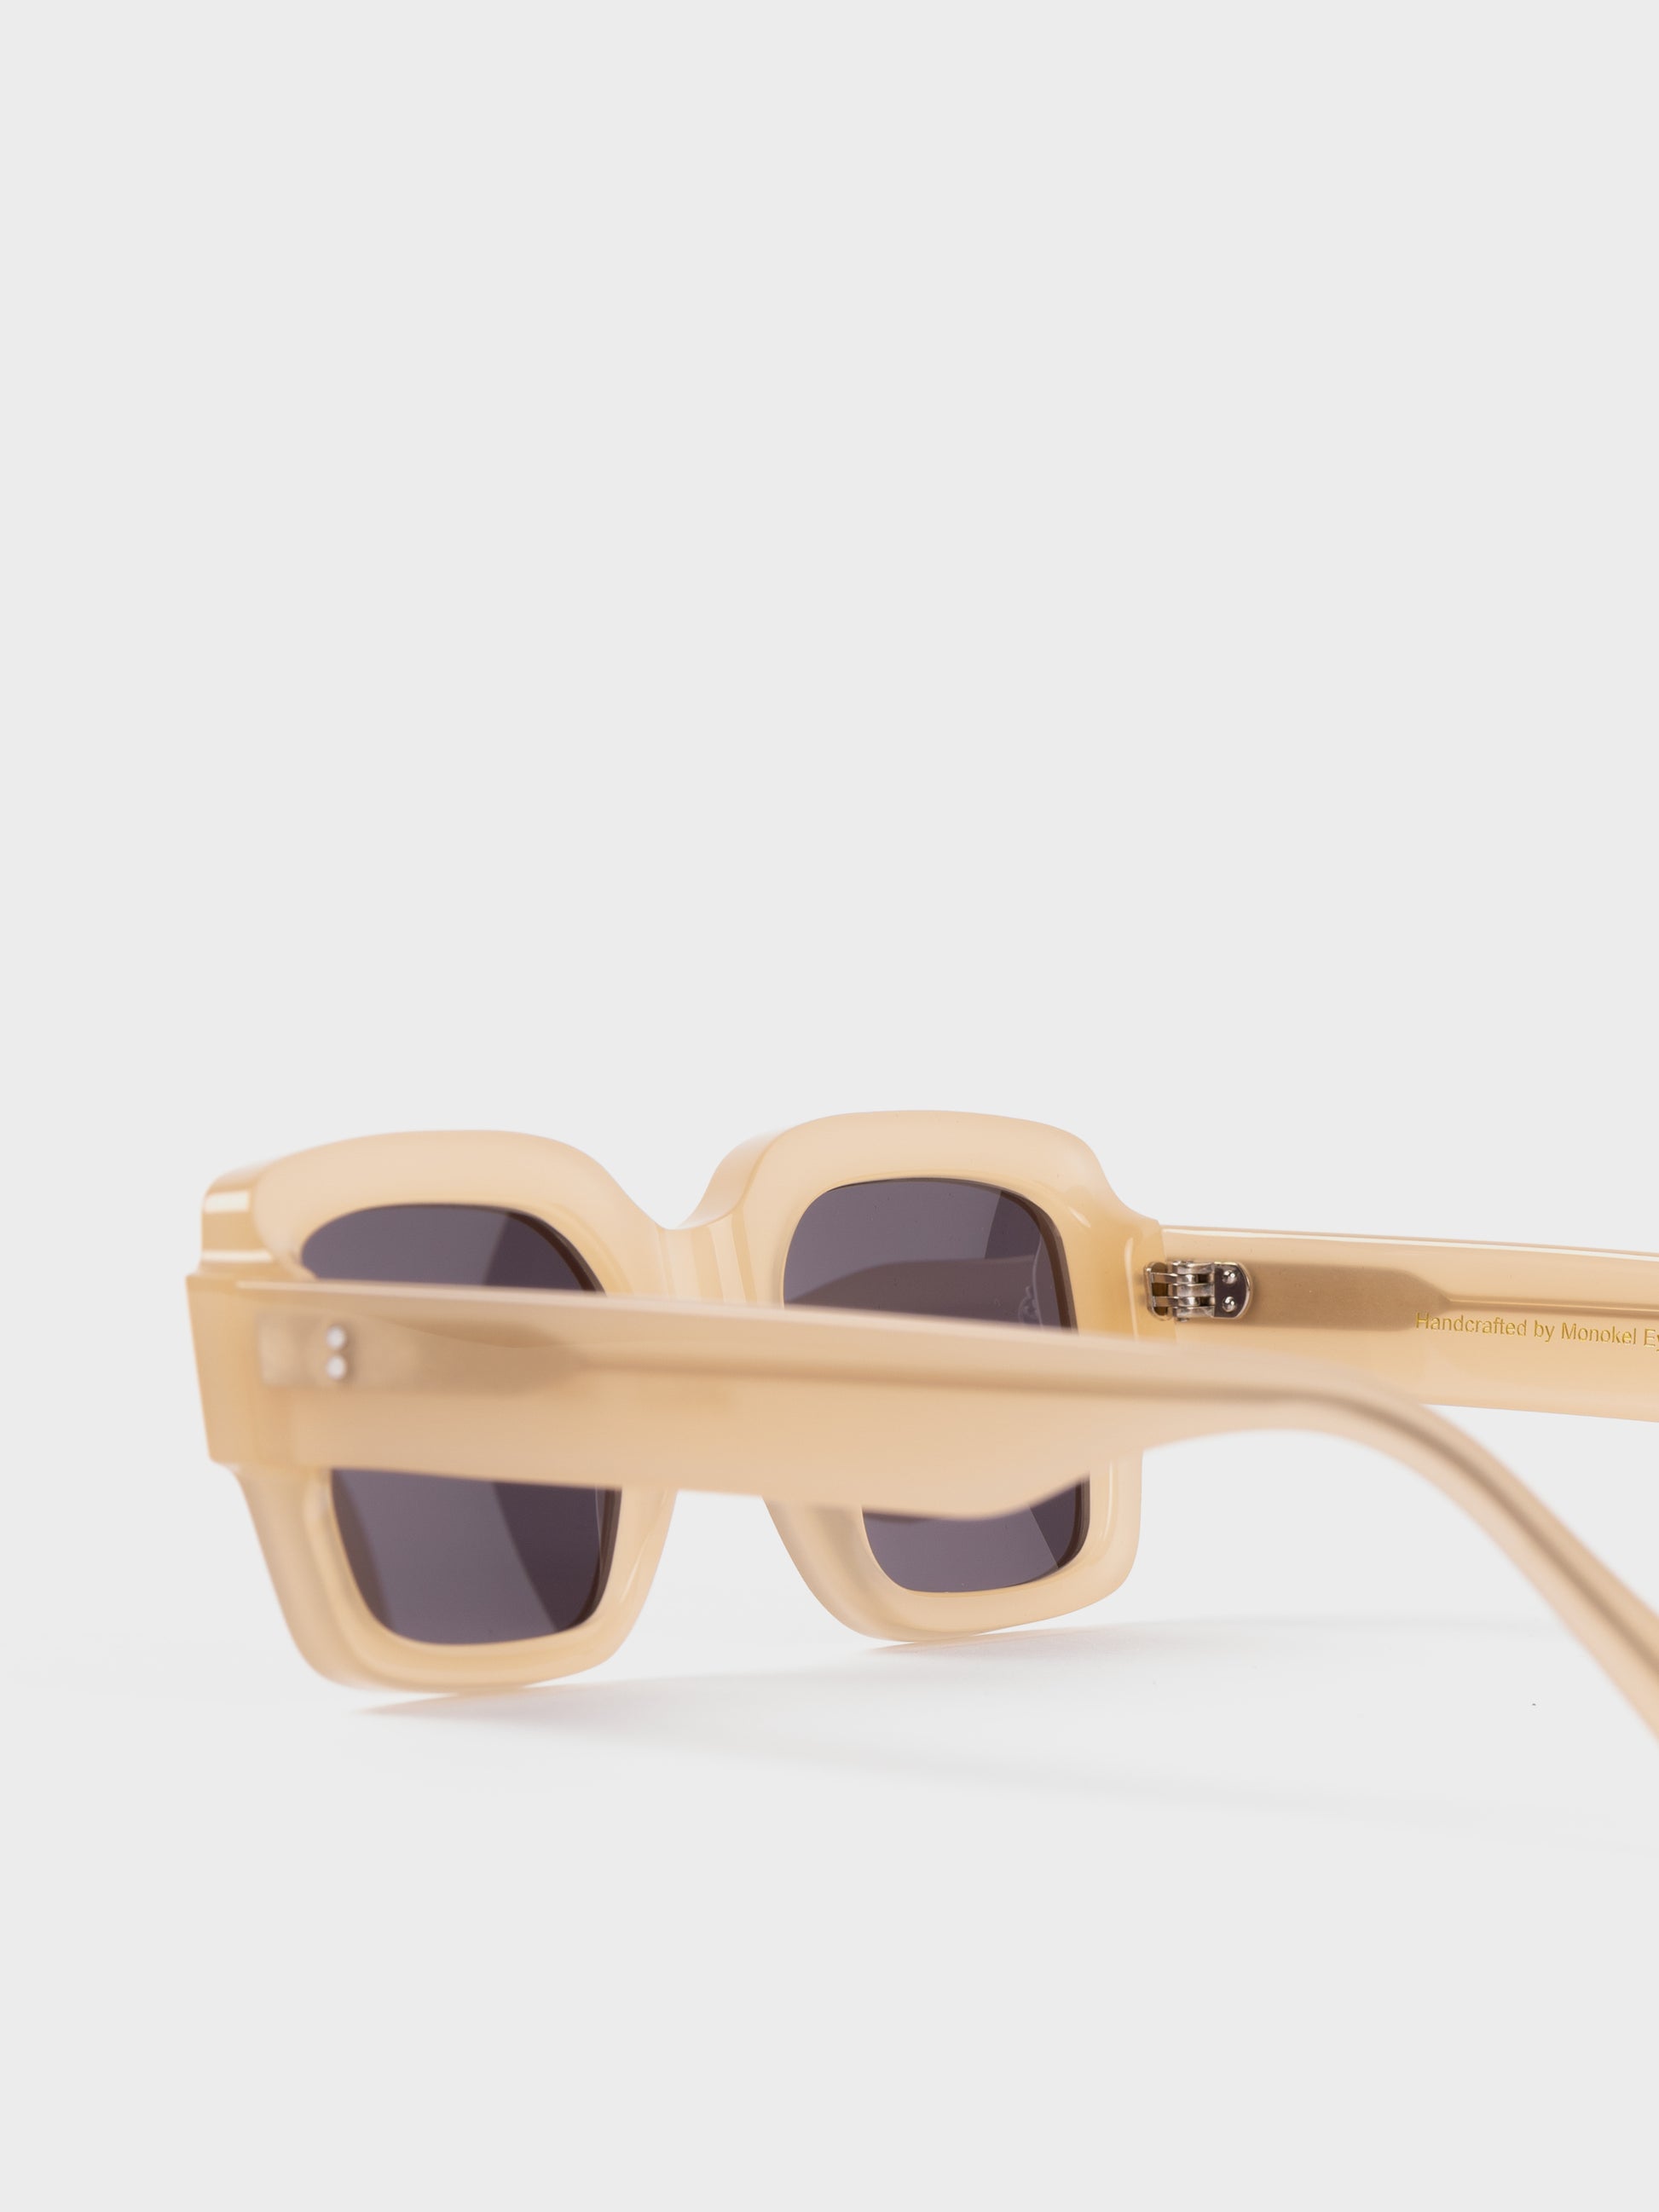 Monokel Sunglasses - Apollo Sand/Grey Lens